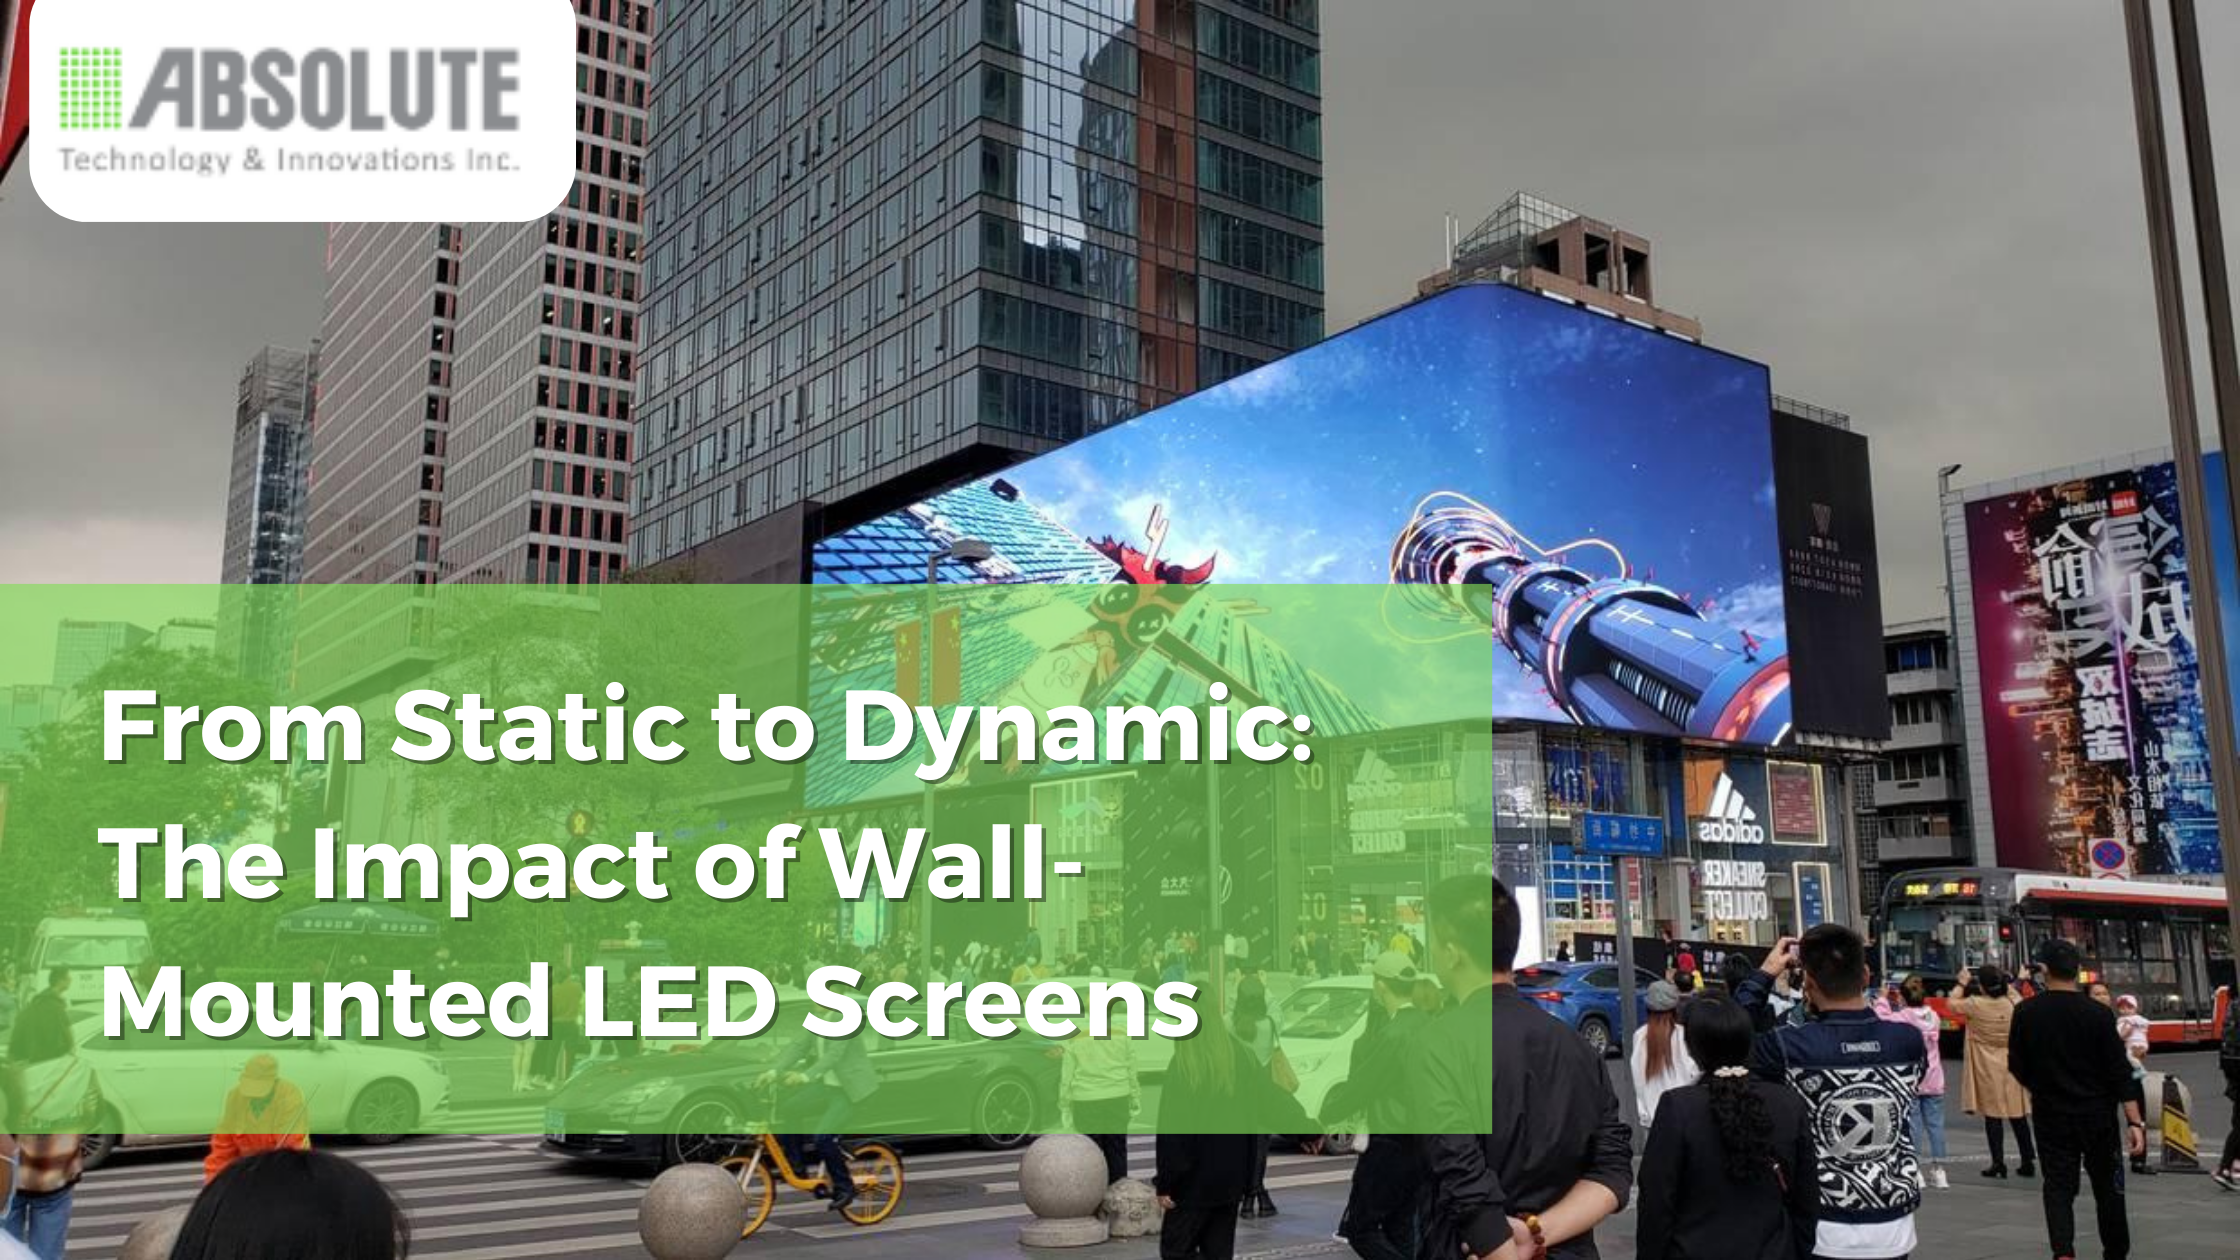 Wall-Mounted LED Screens